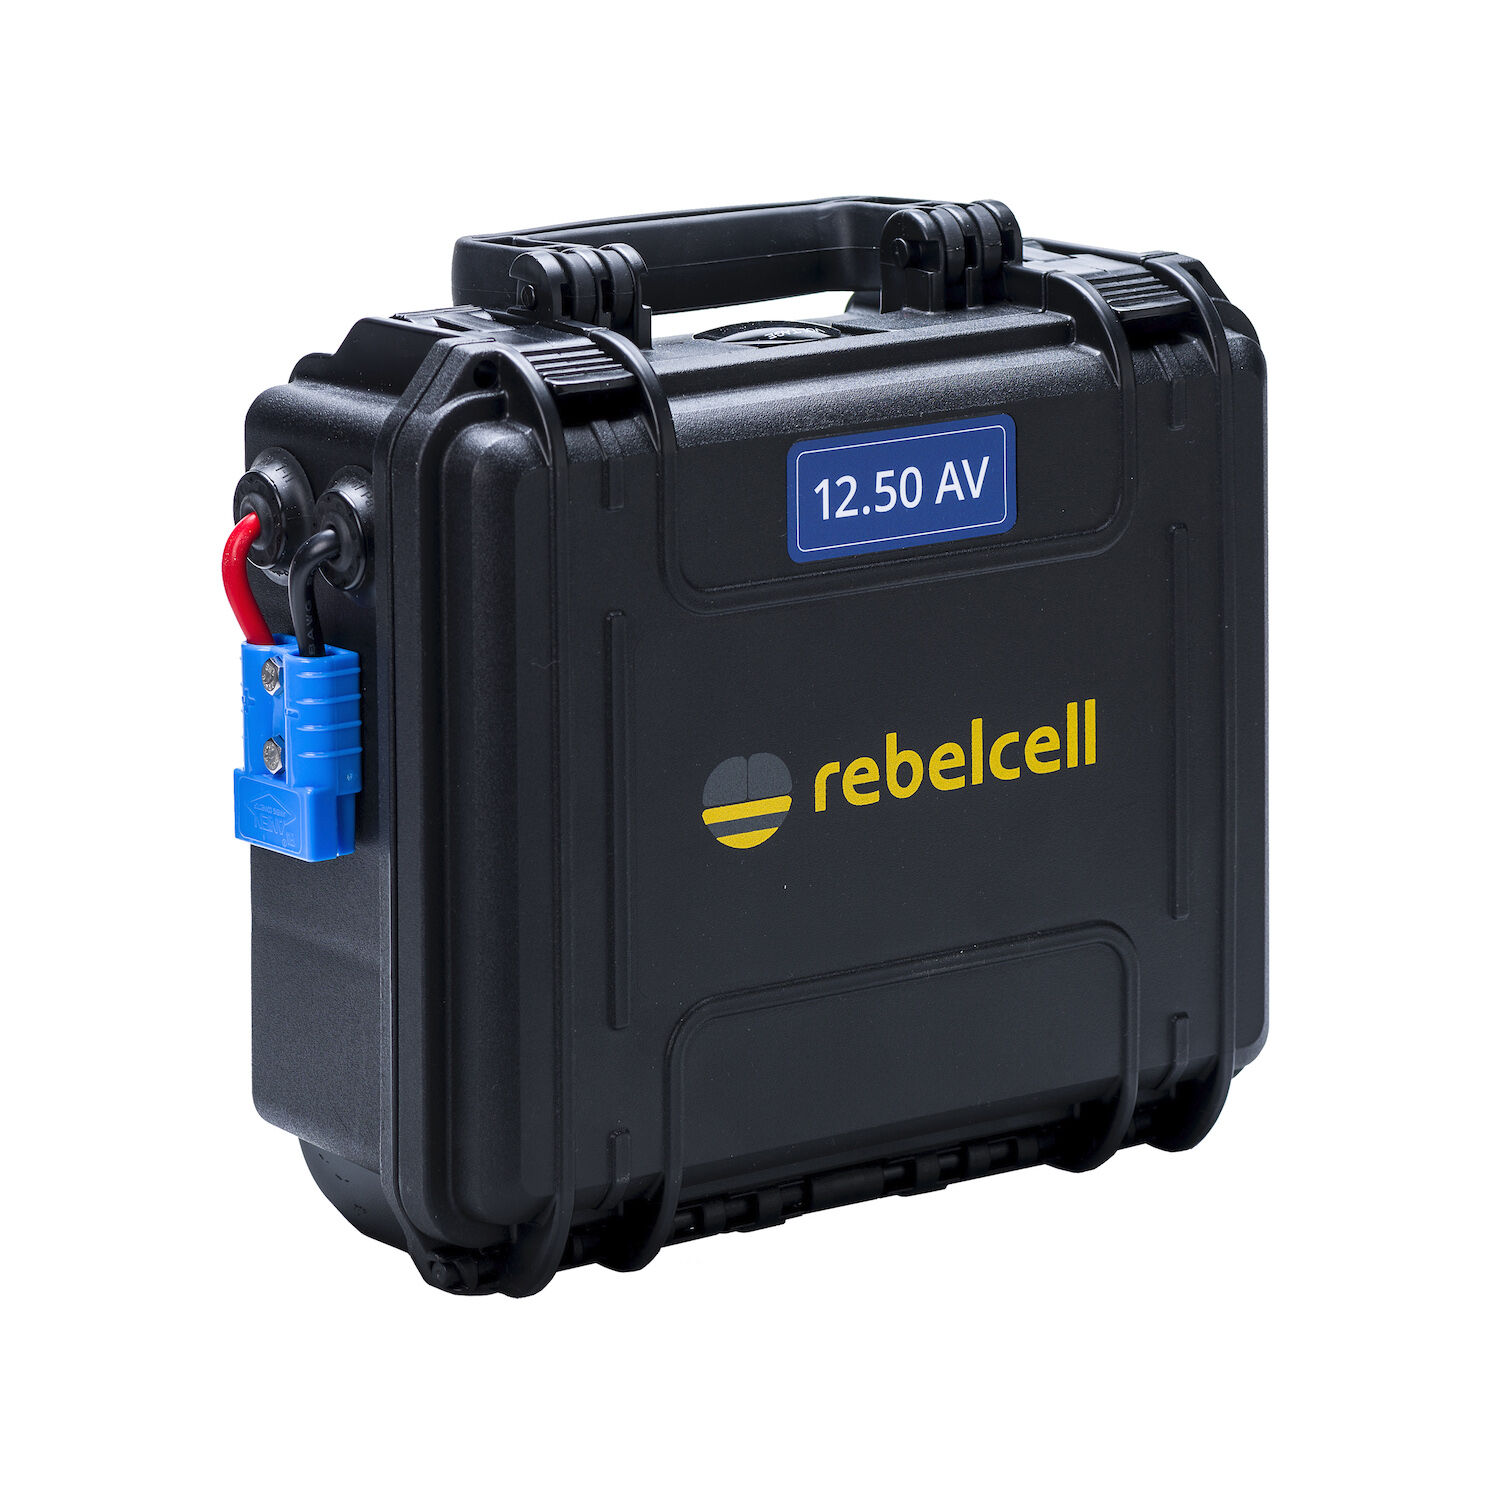 RebelCell Outdoorbox 12.50 AV Koffer mit 12V 50Ah Lithium Batterie (634Wh)